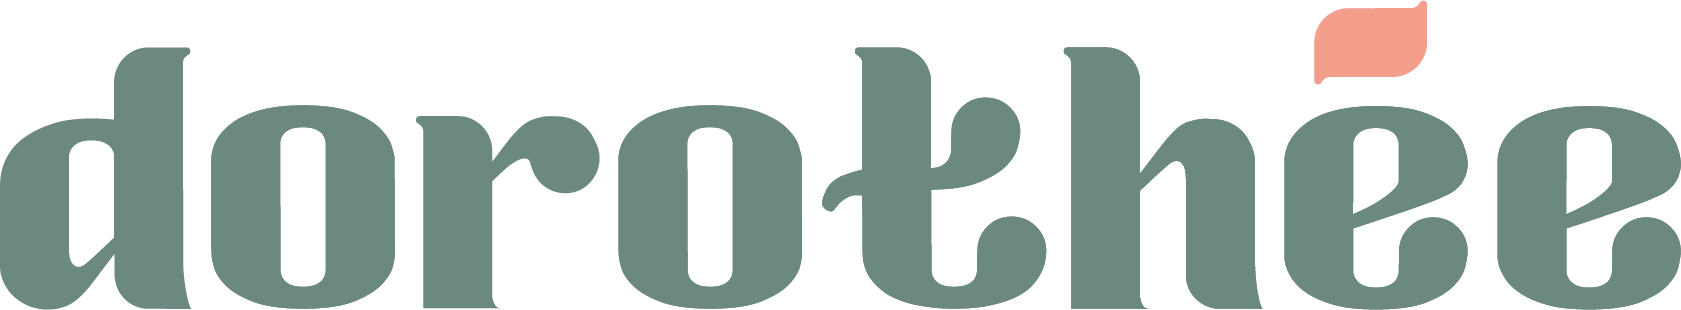 dorothée-logo-full-vert-fond-transparent